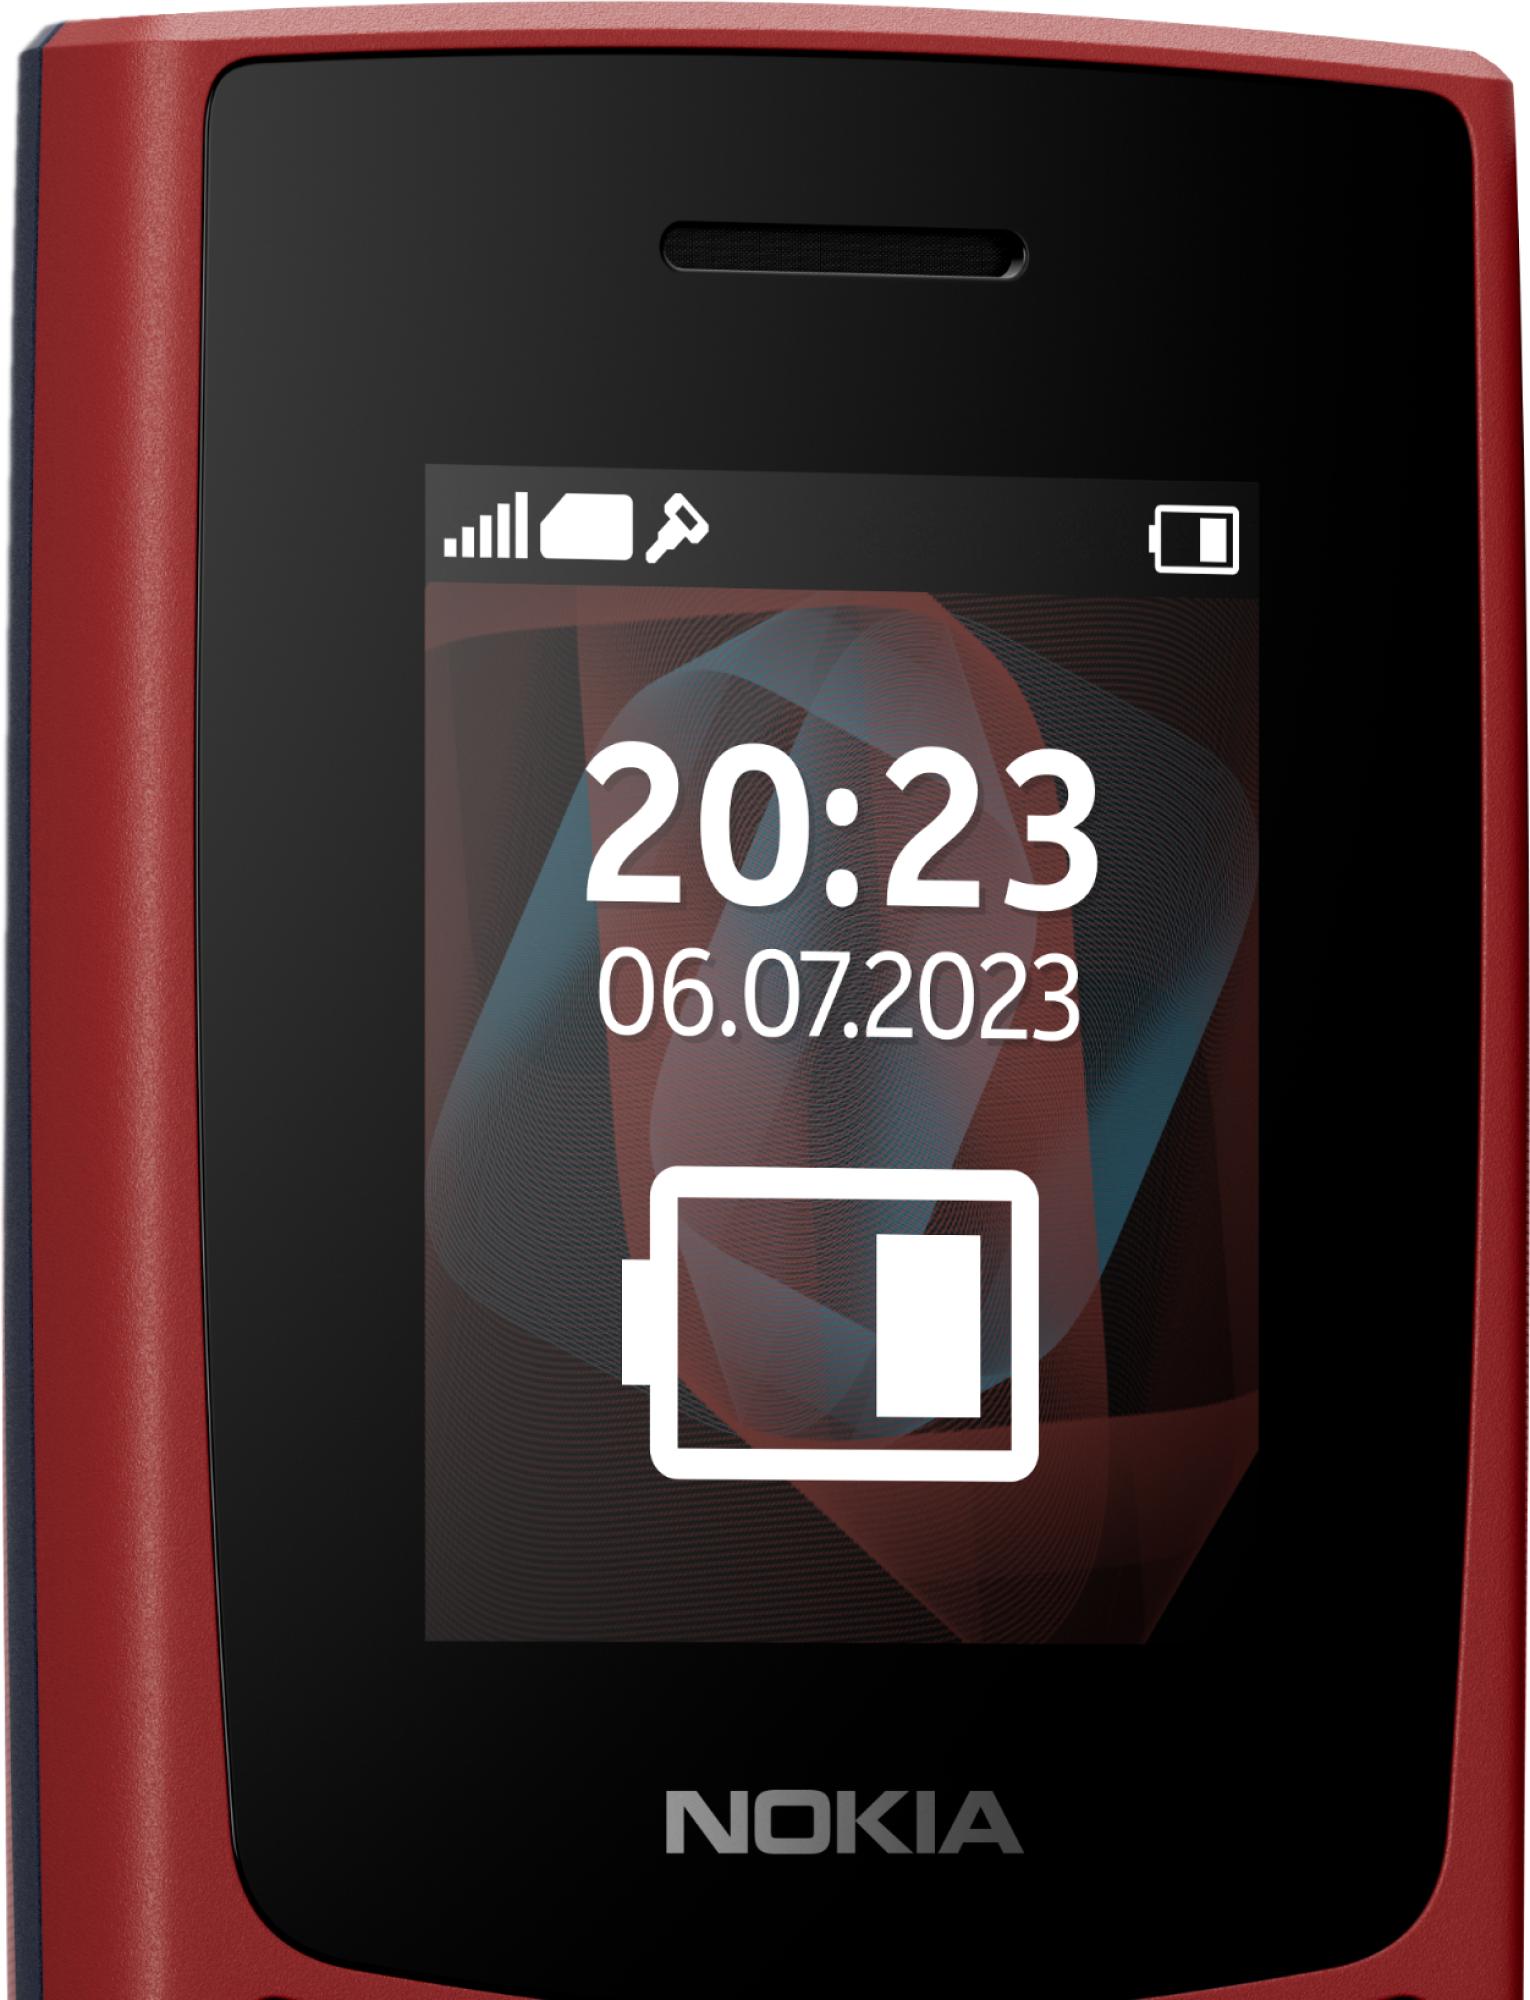 Nokia 105 (2019) - Clove Technology